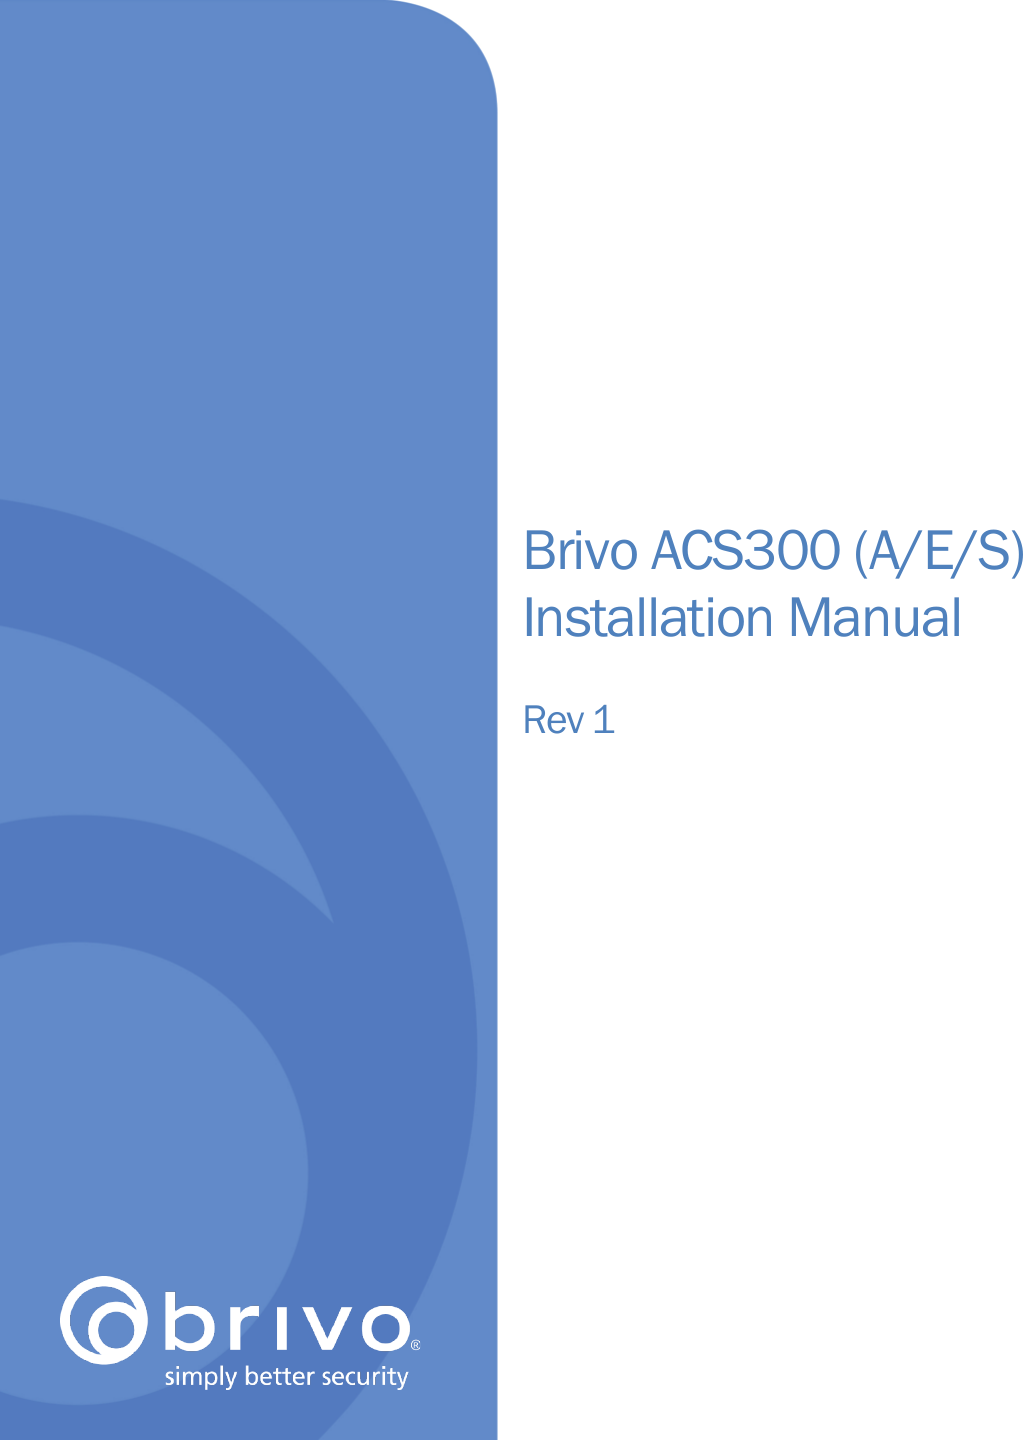       Brivo ACS300 (A/E/S) Installation Manual  Rev 1 